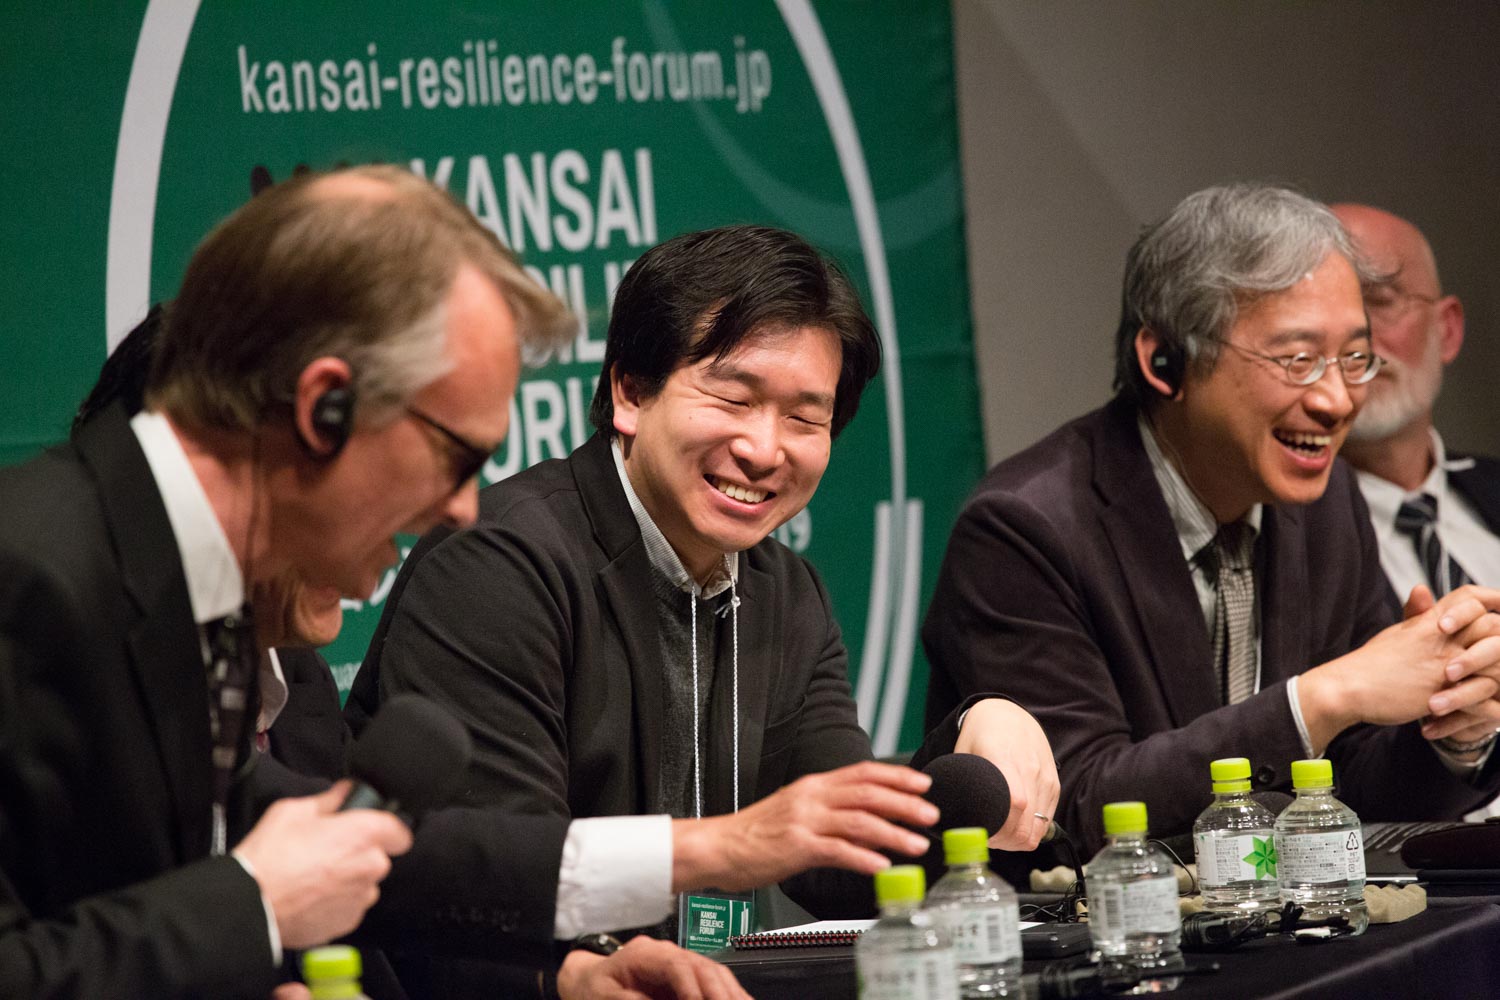 The Kansai Resilience Forum 2019